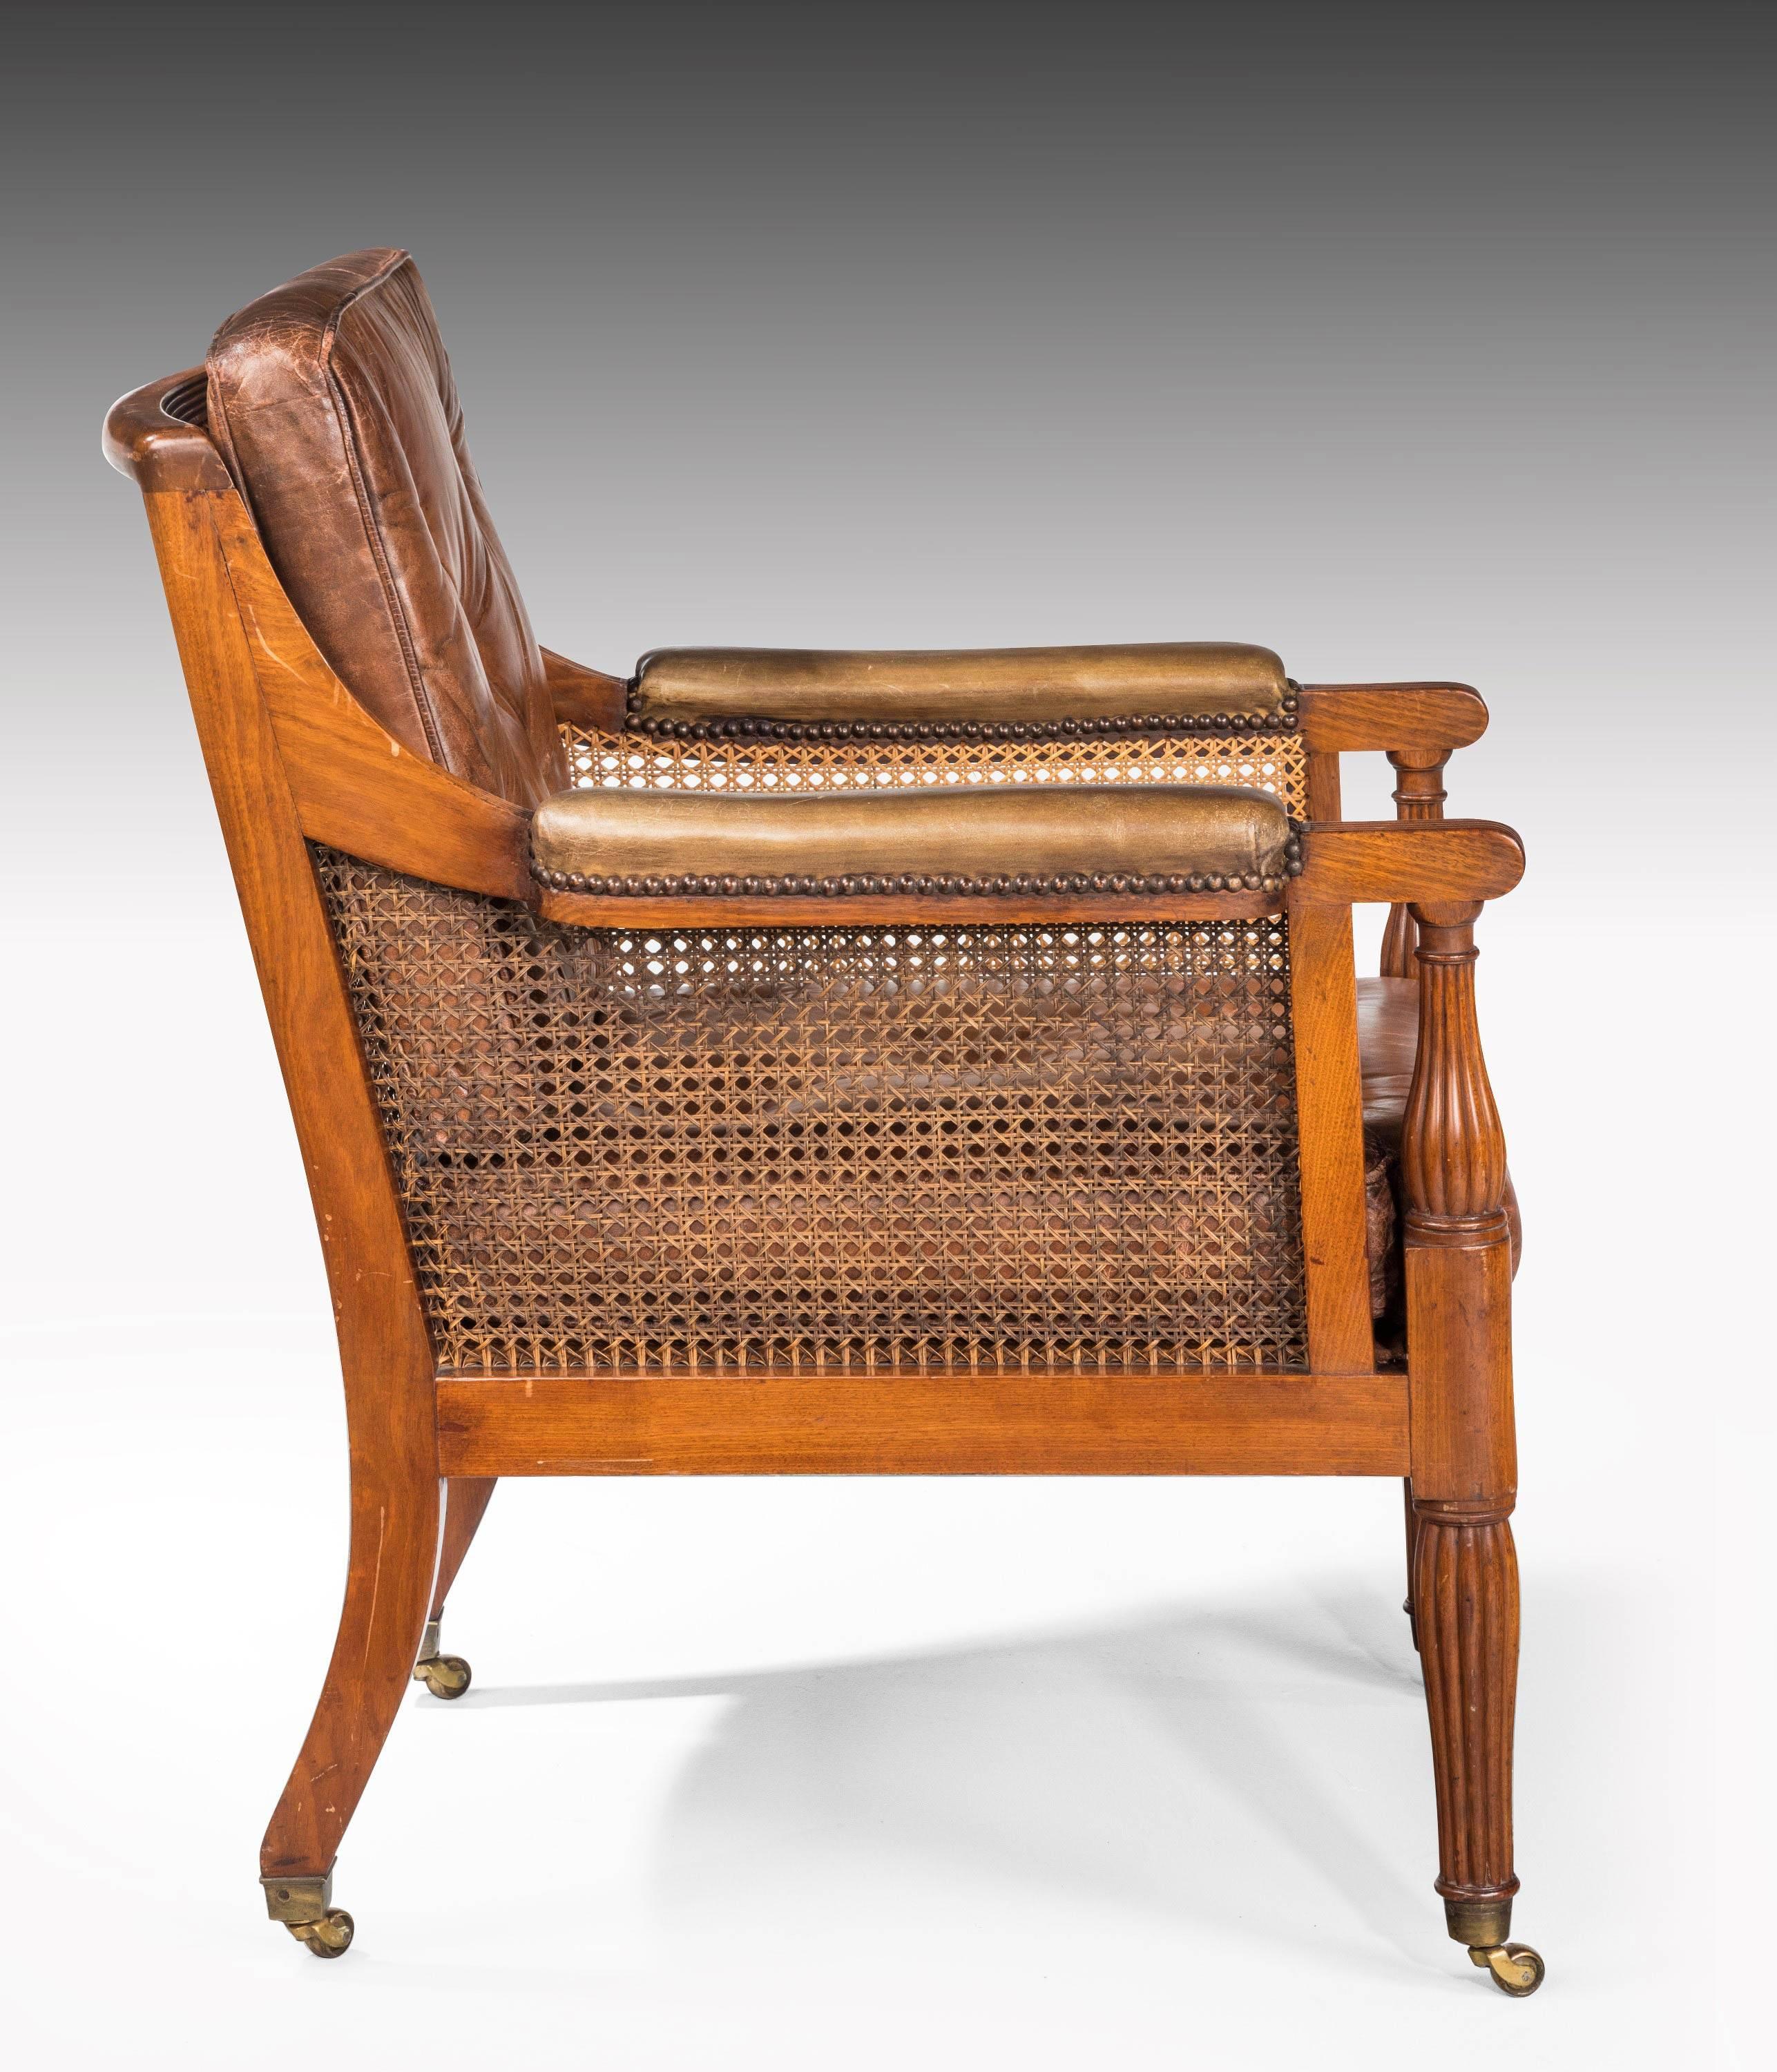 English Pair of Regency Period Bergere Armchairs Retaining the Original Canework